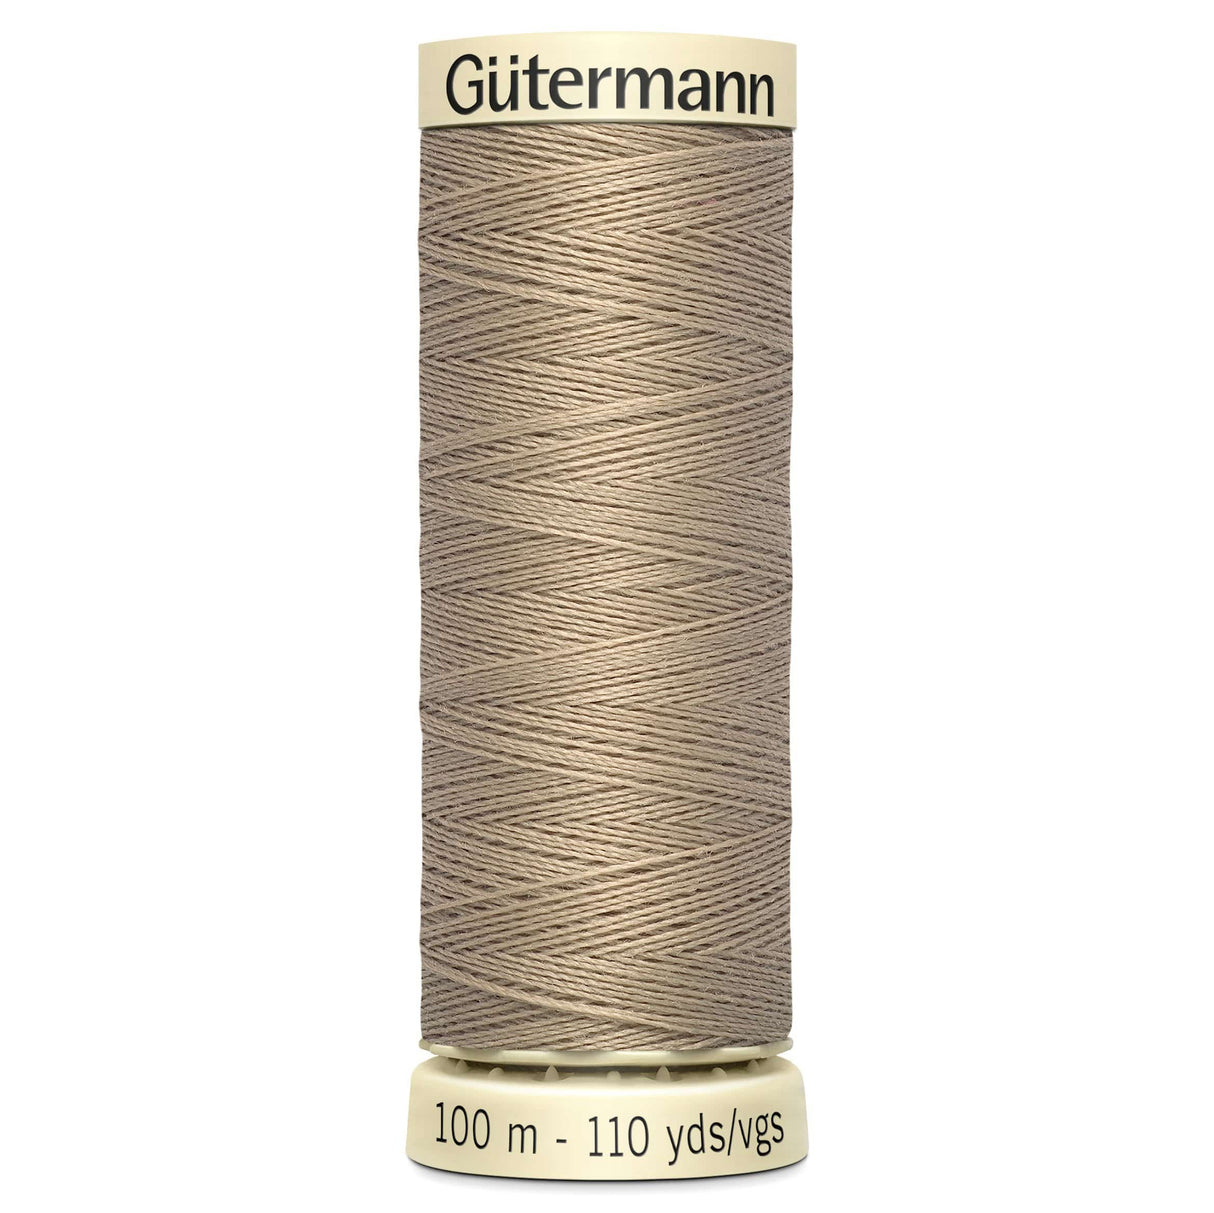 Groves Haberdashery 464 Gutermann Thread Sewing Cotton 100 m Black to Pink